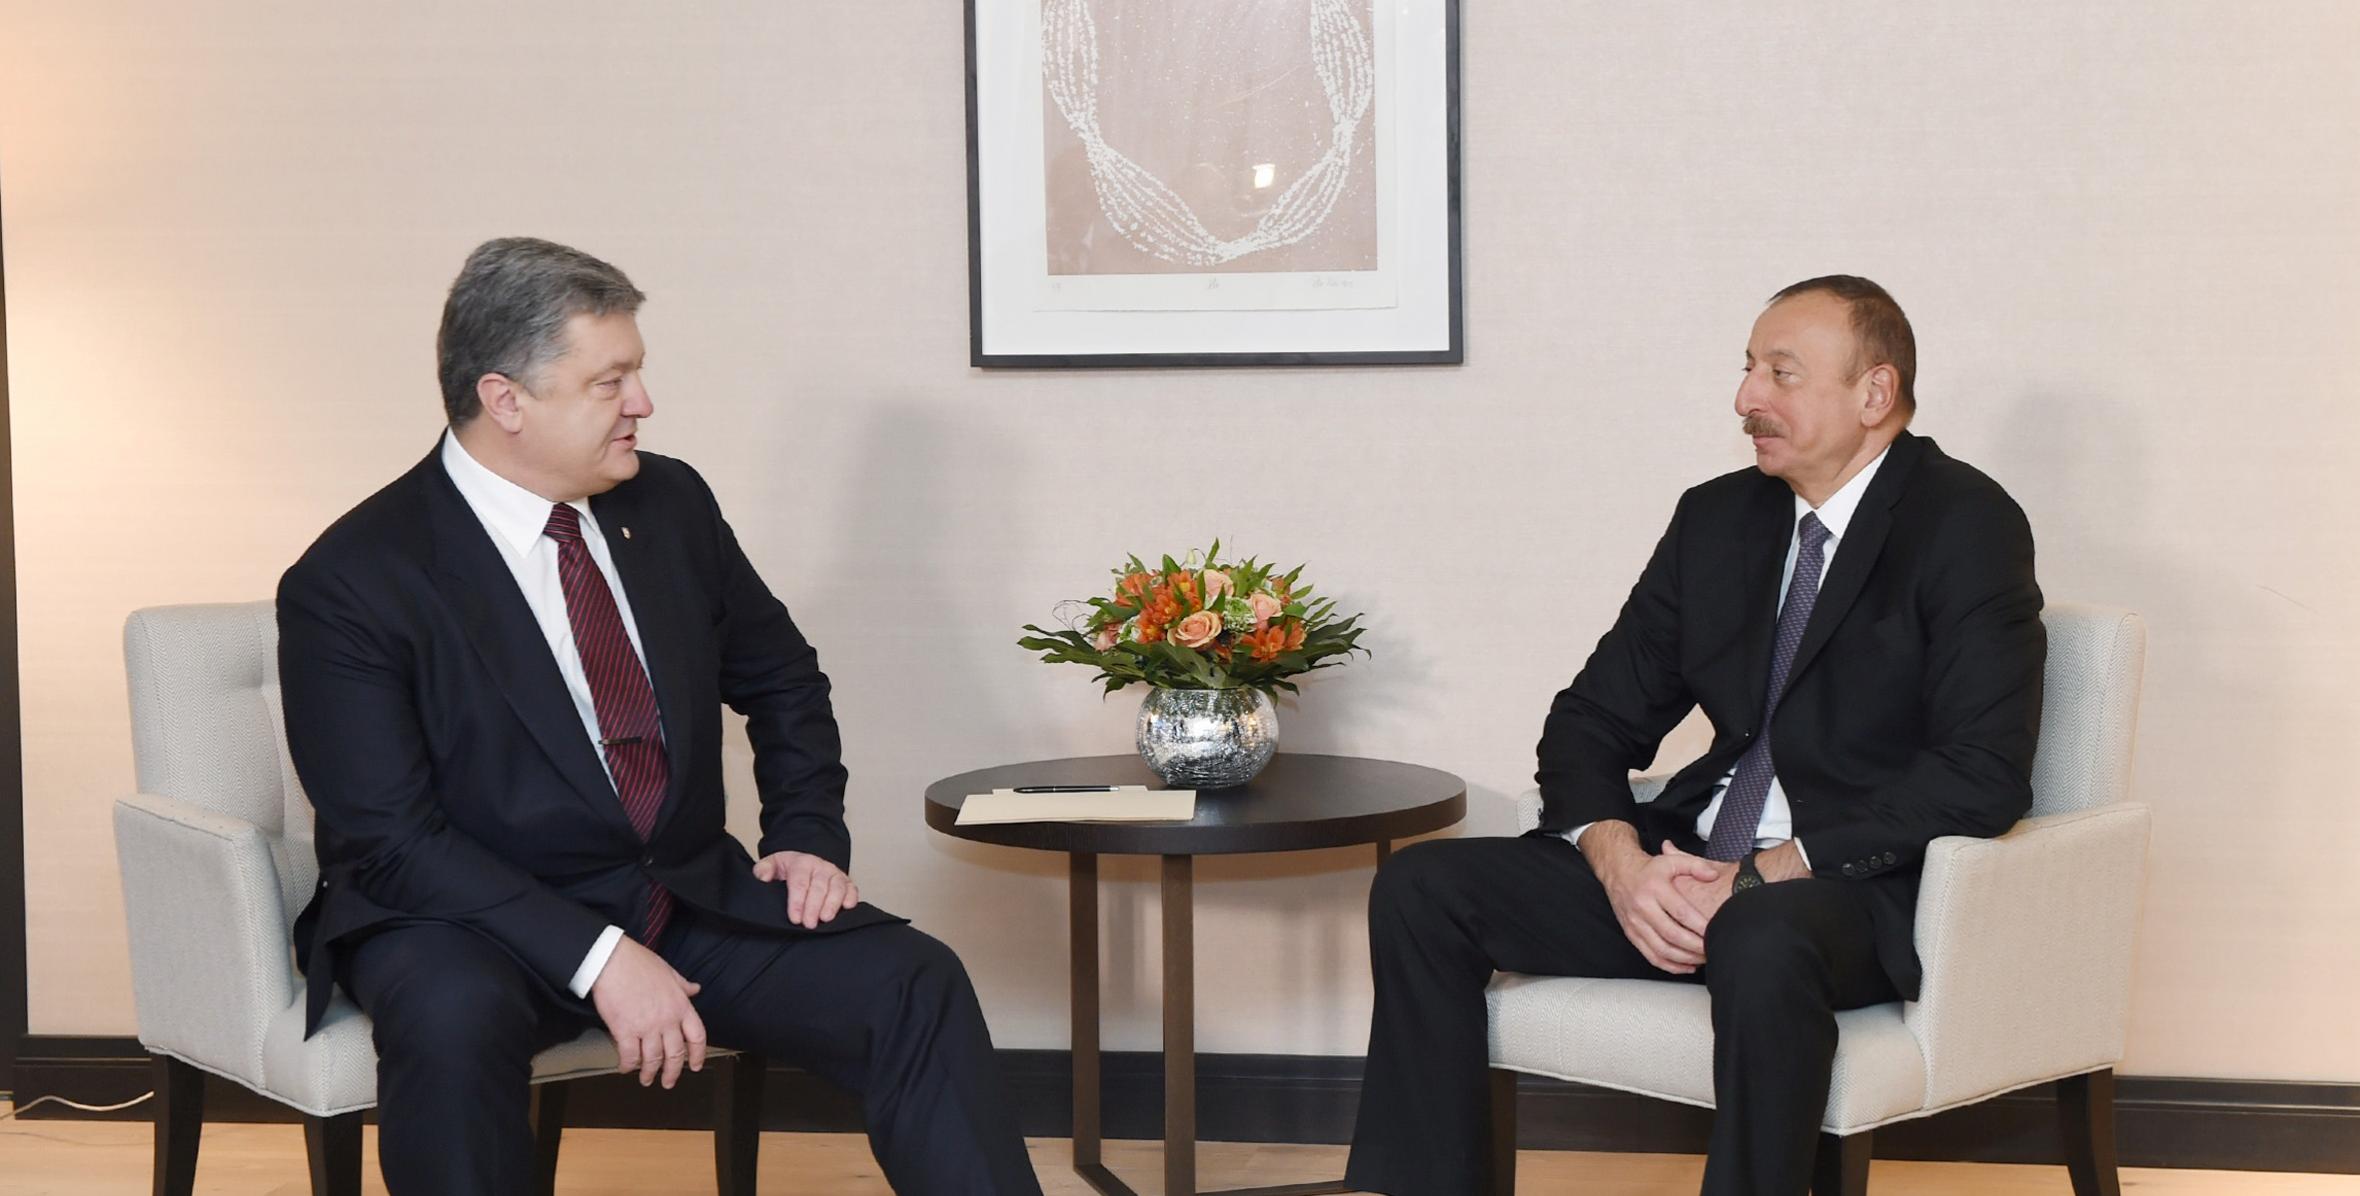 Ilham Aliyev met with Ukrainian President Petro Poroshenko